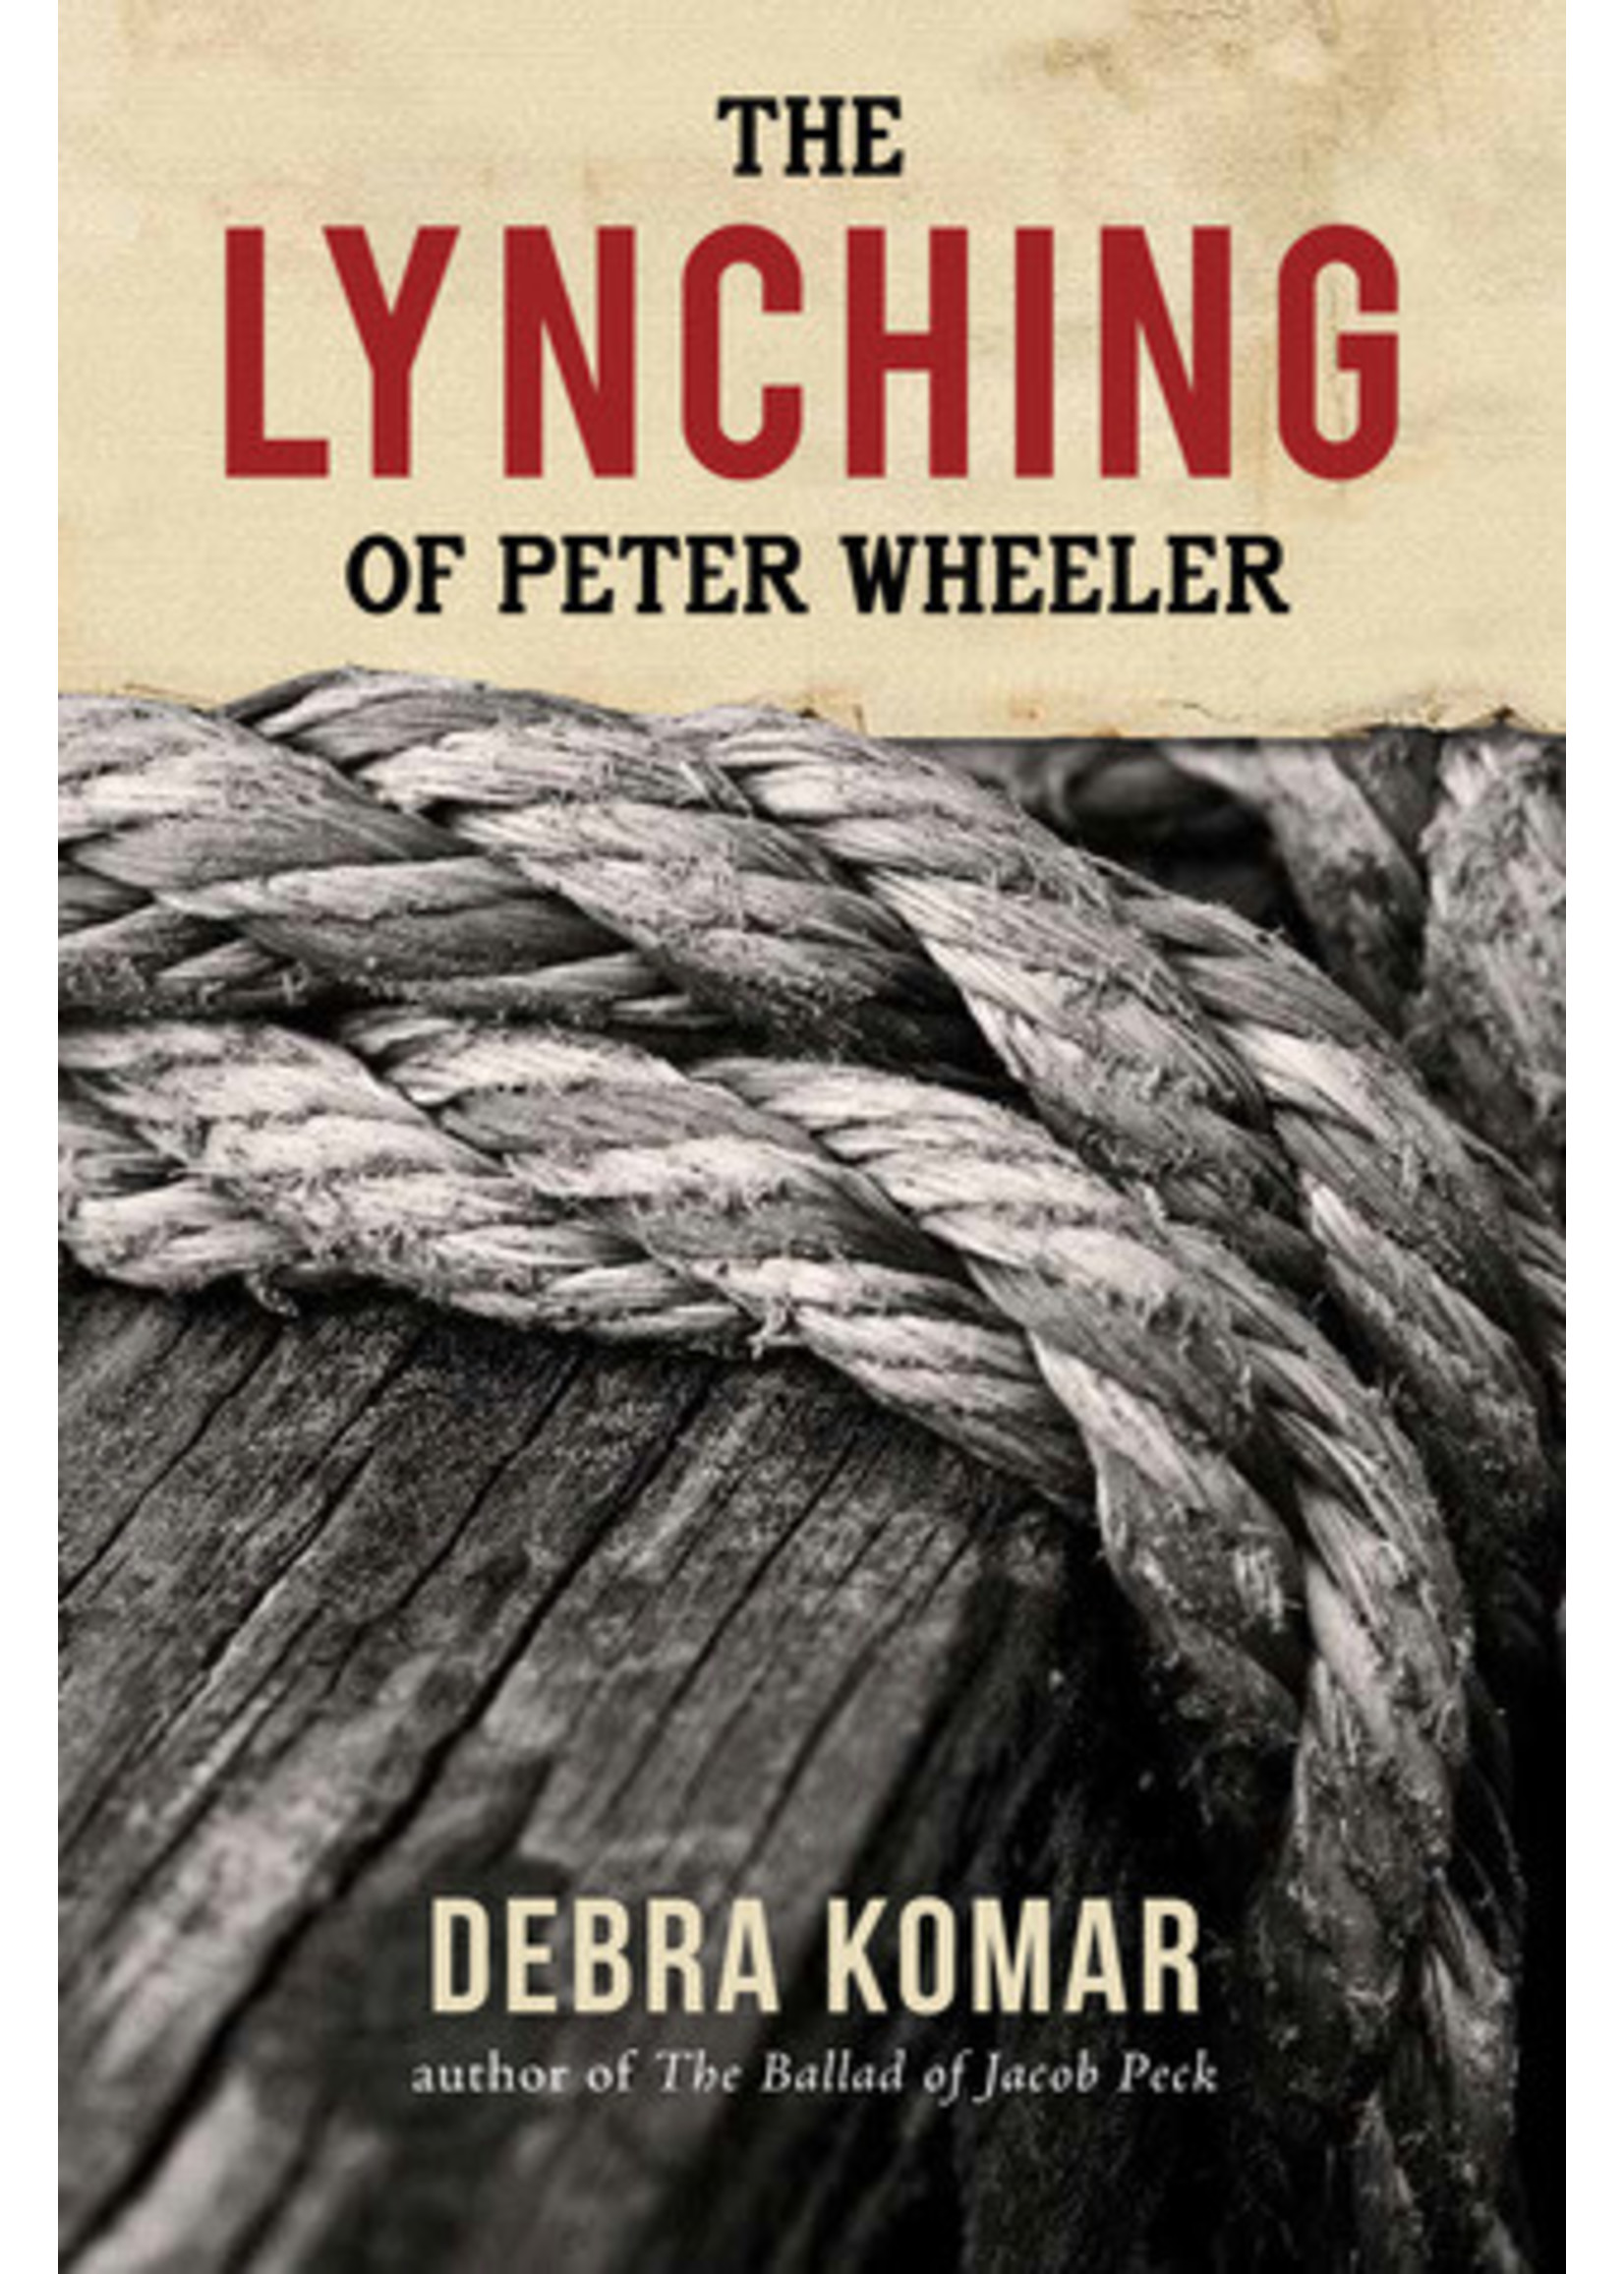 The Lynching of Peter Wheeler by Debra Komar